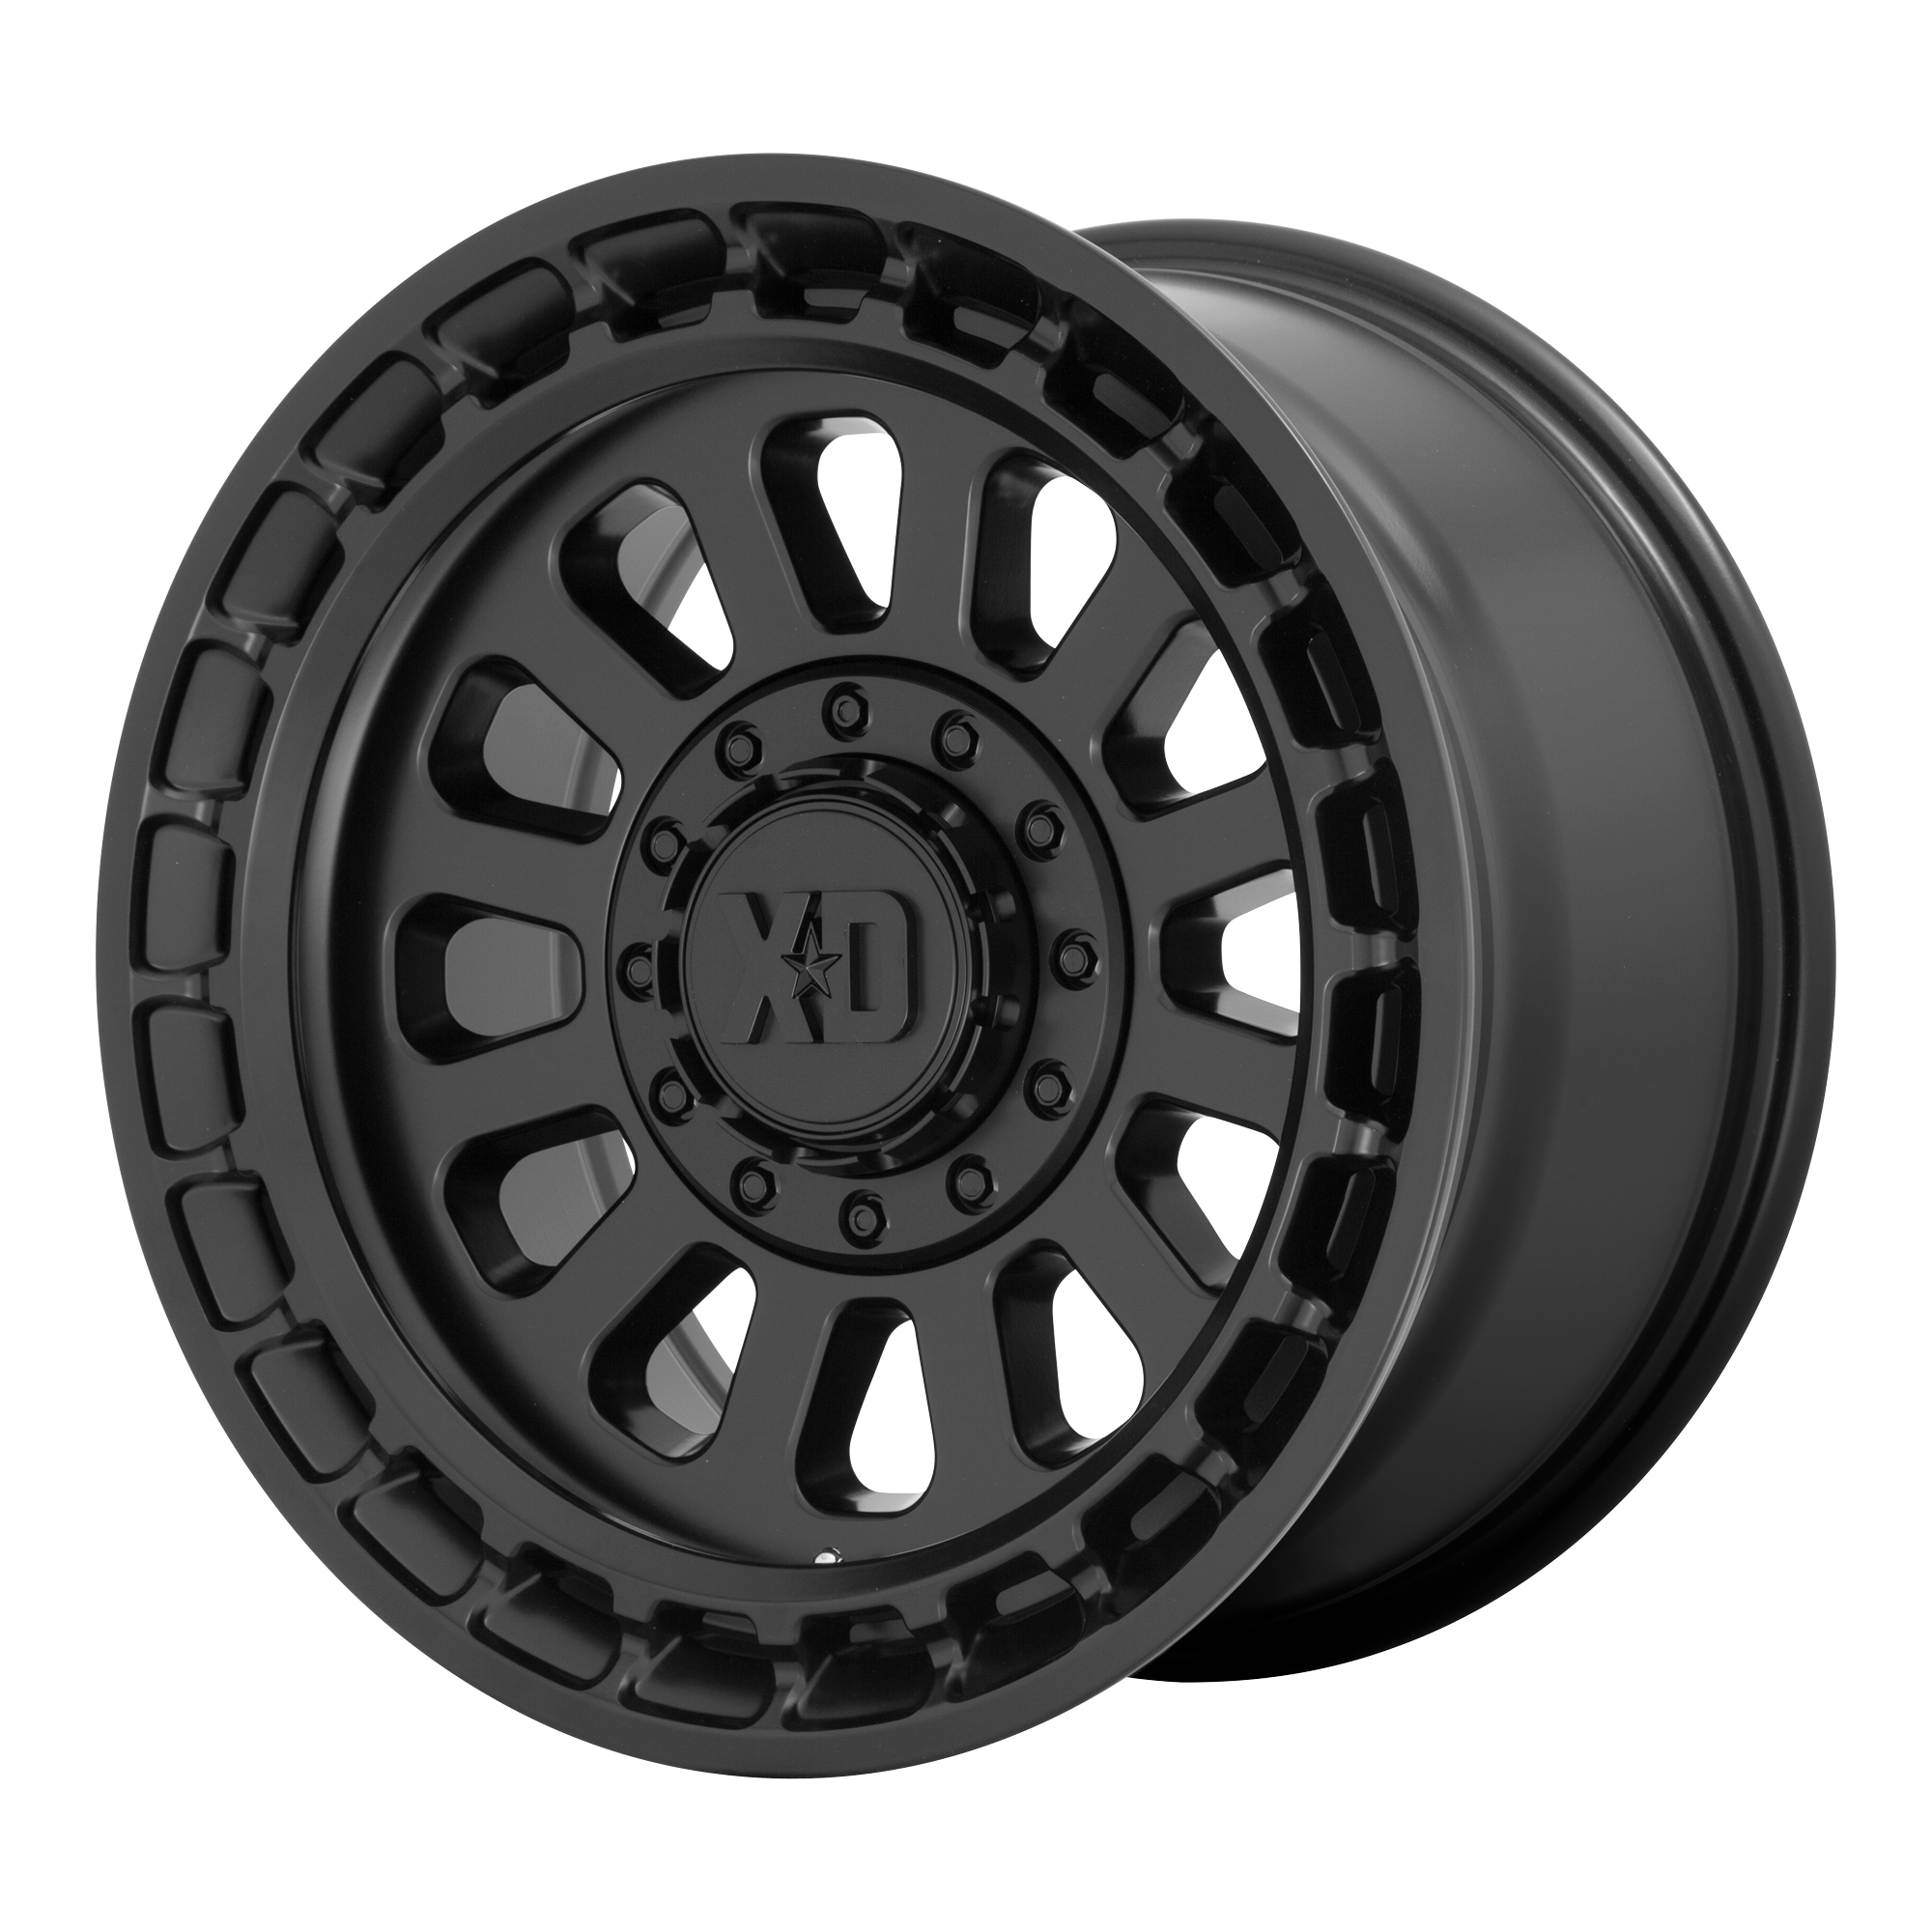 XD 17"x9" Non-Chrome Satin Black Custom Wheel ARSWCWXD85679067700